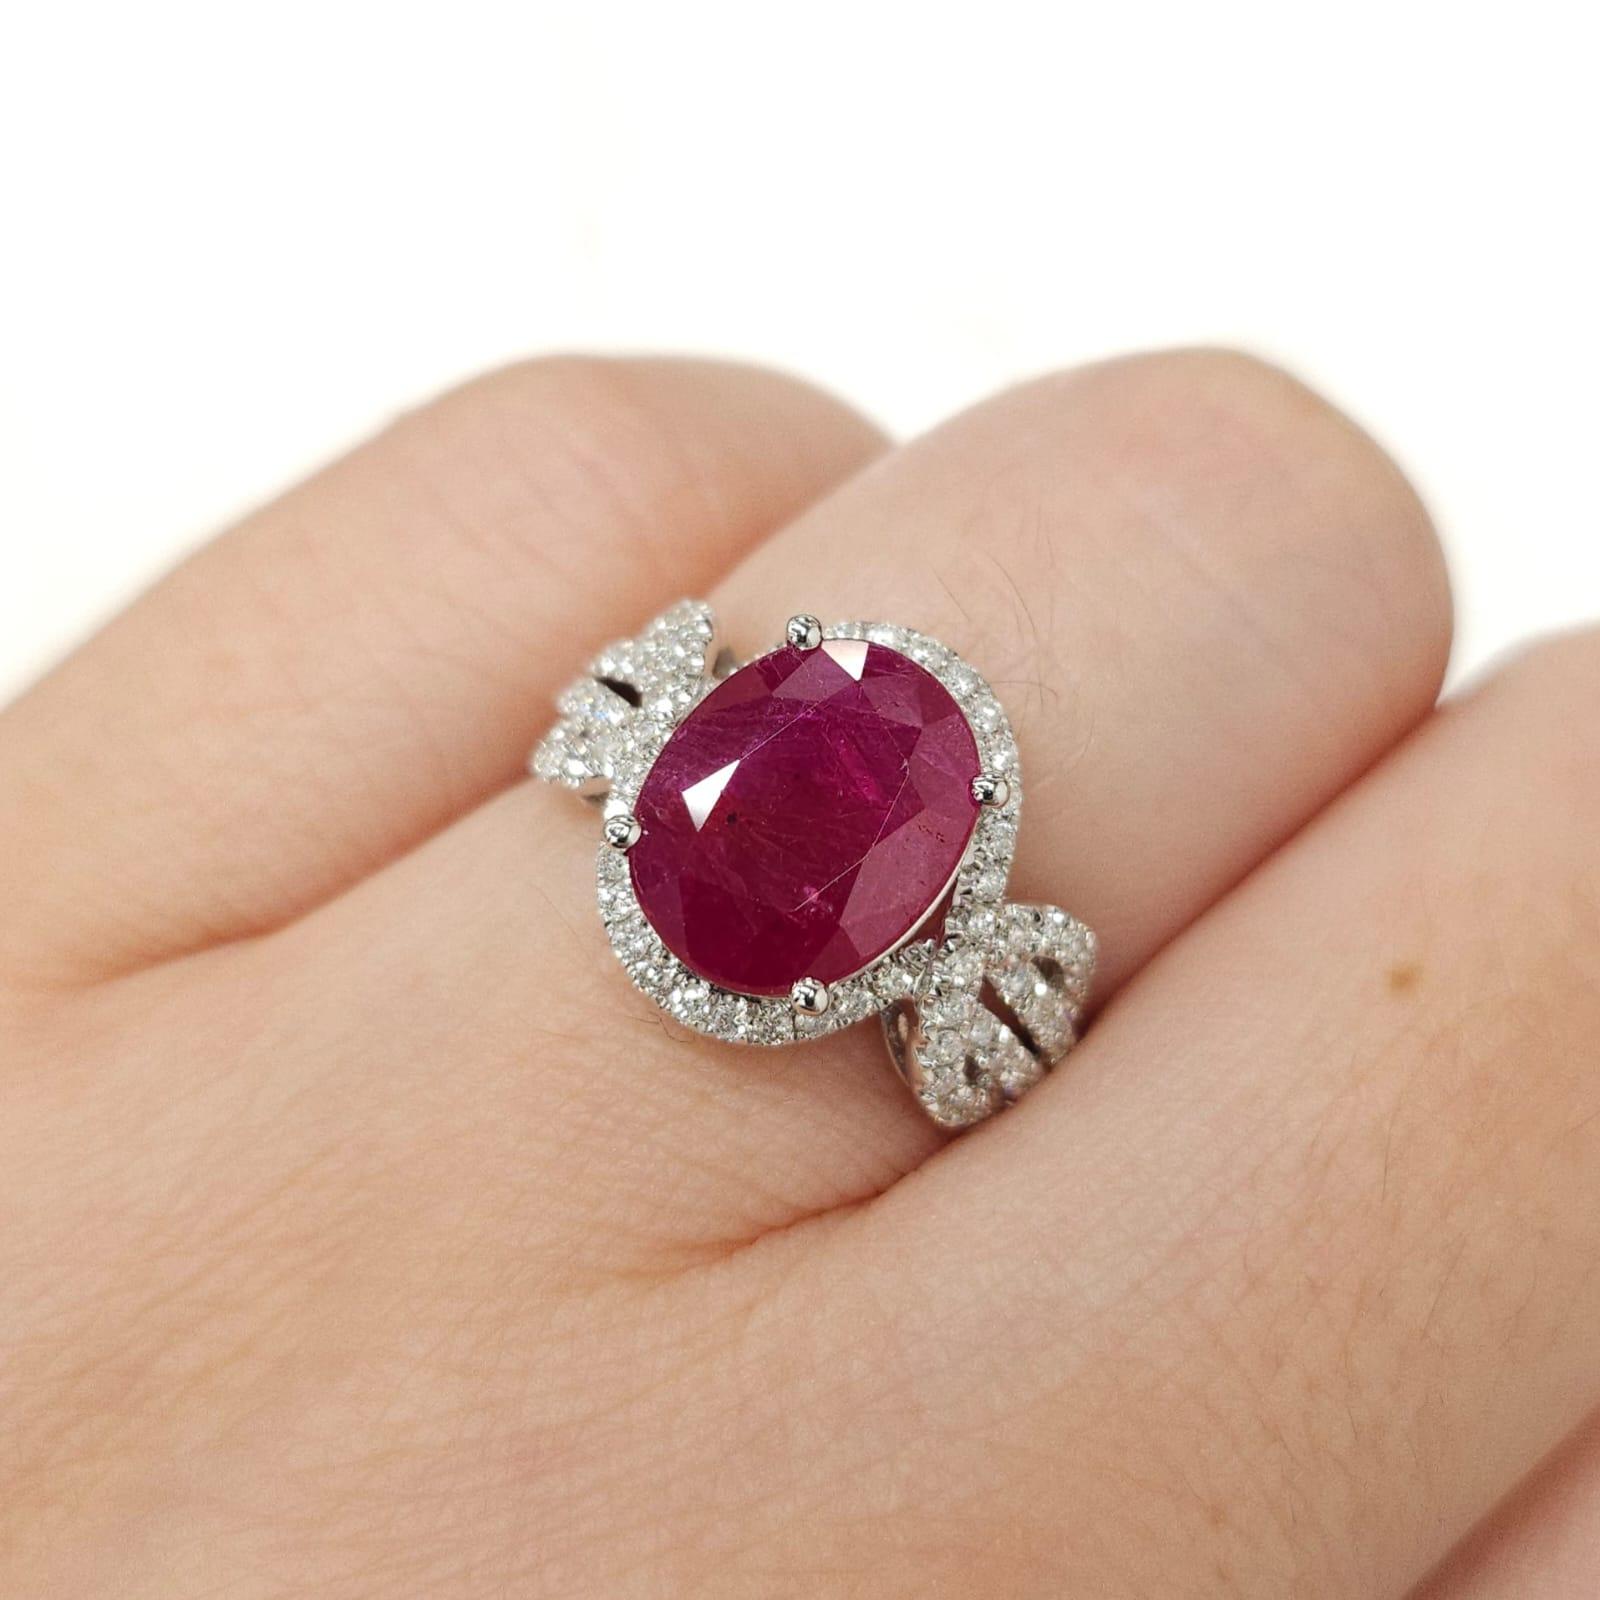 Modern IGI Certified 4.12 Carat Ruby & Diamond Ring in 18K White Gold For Sale